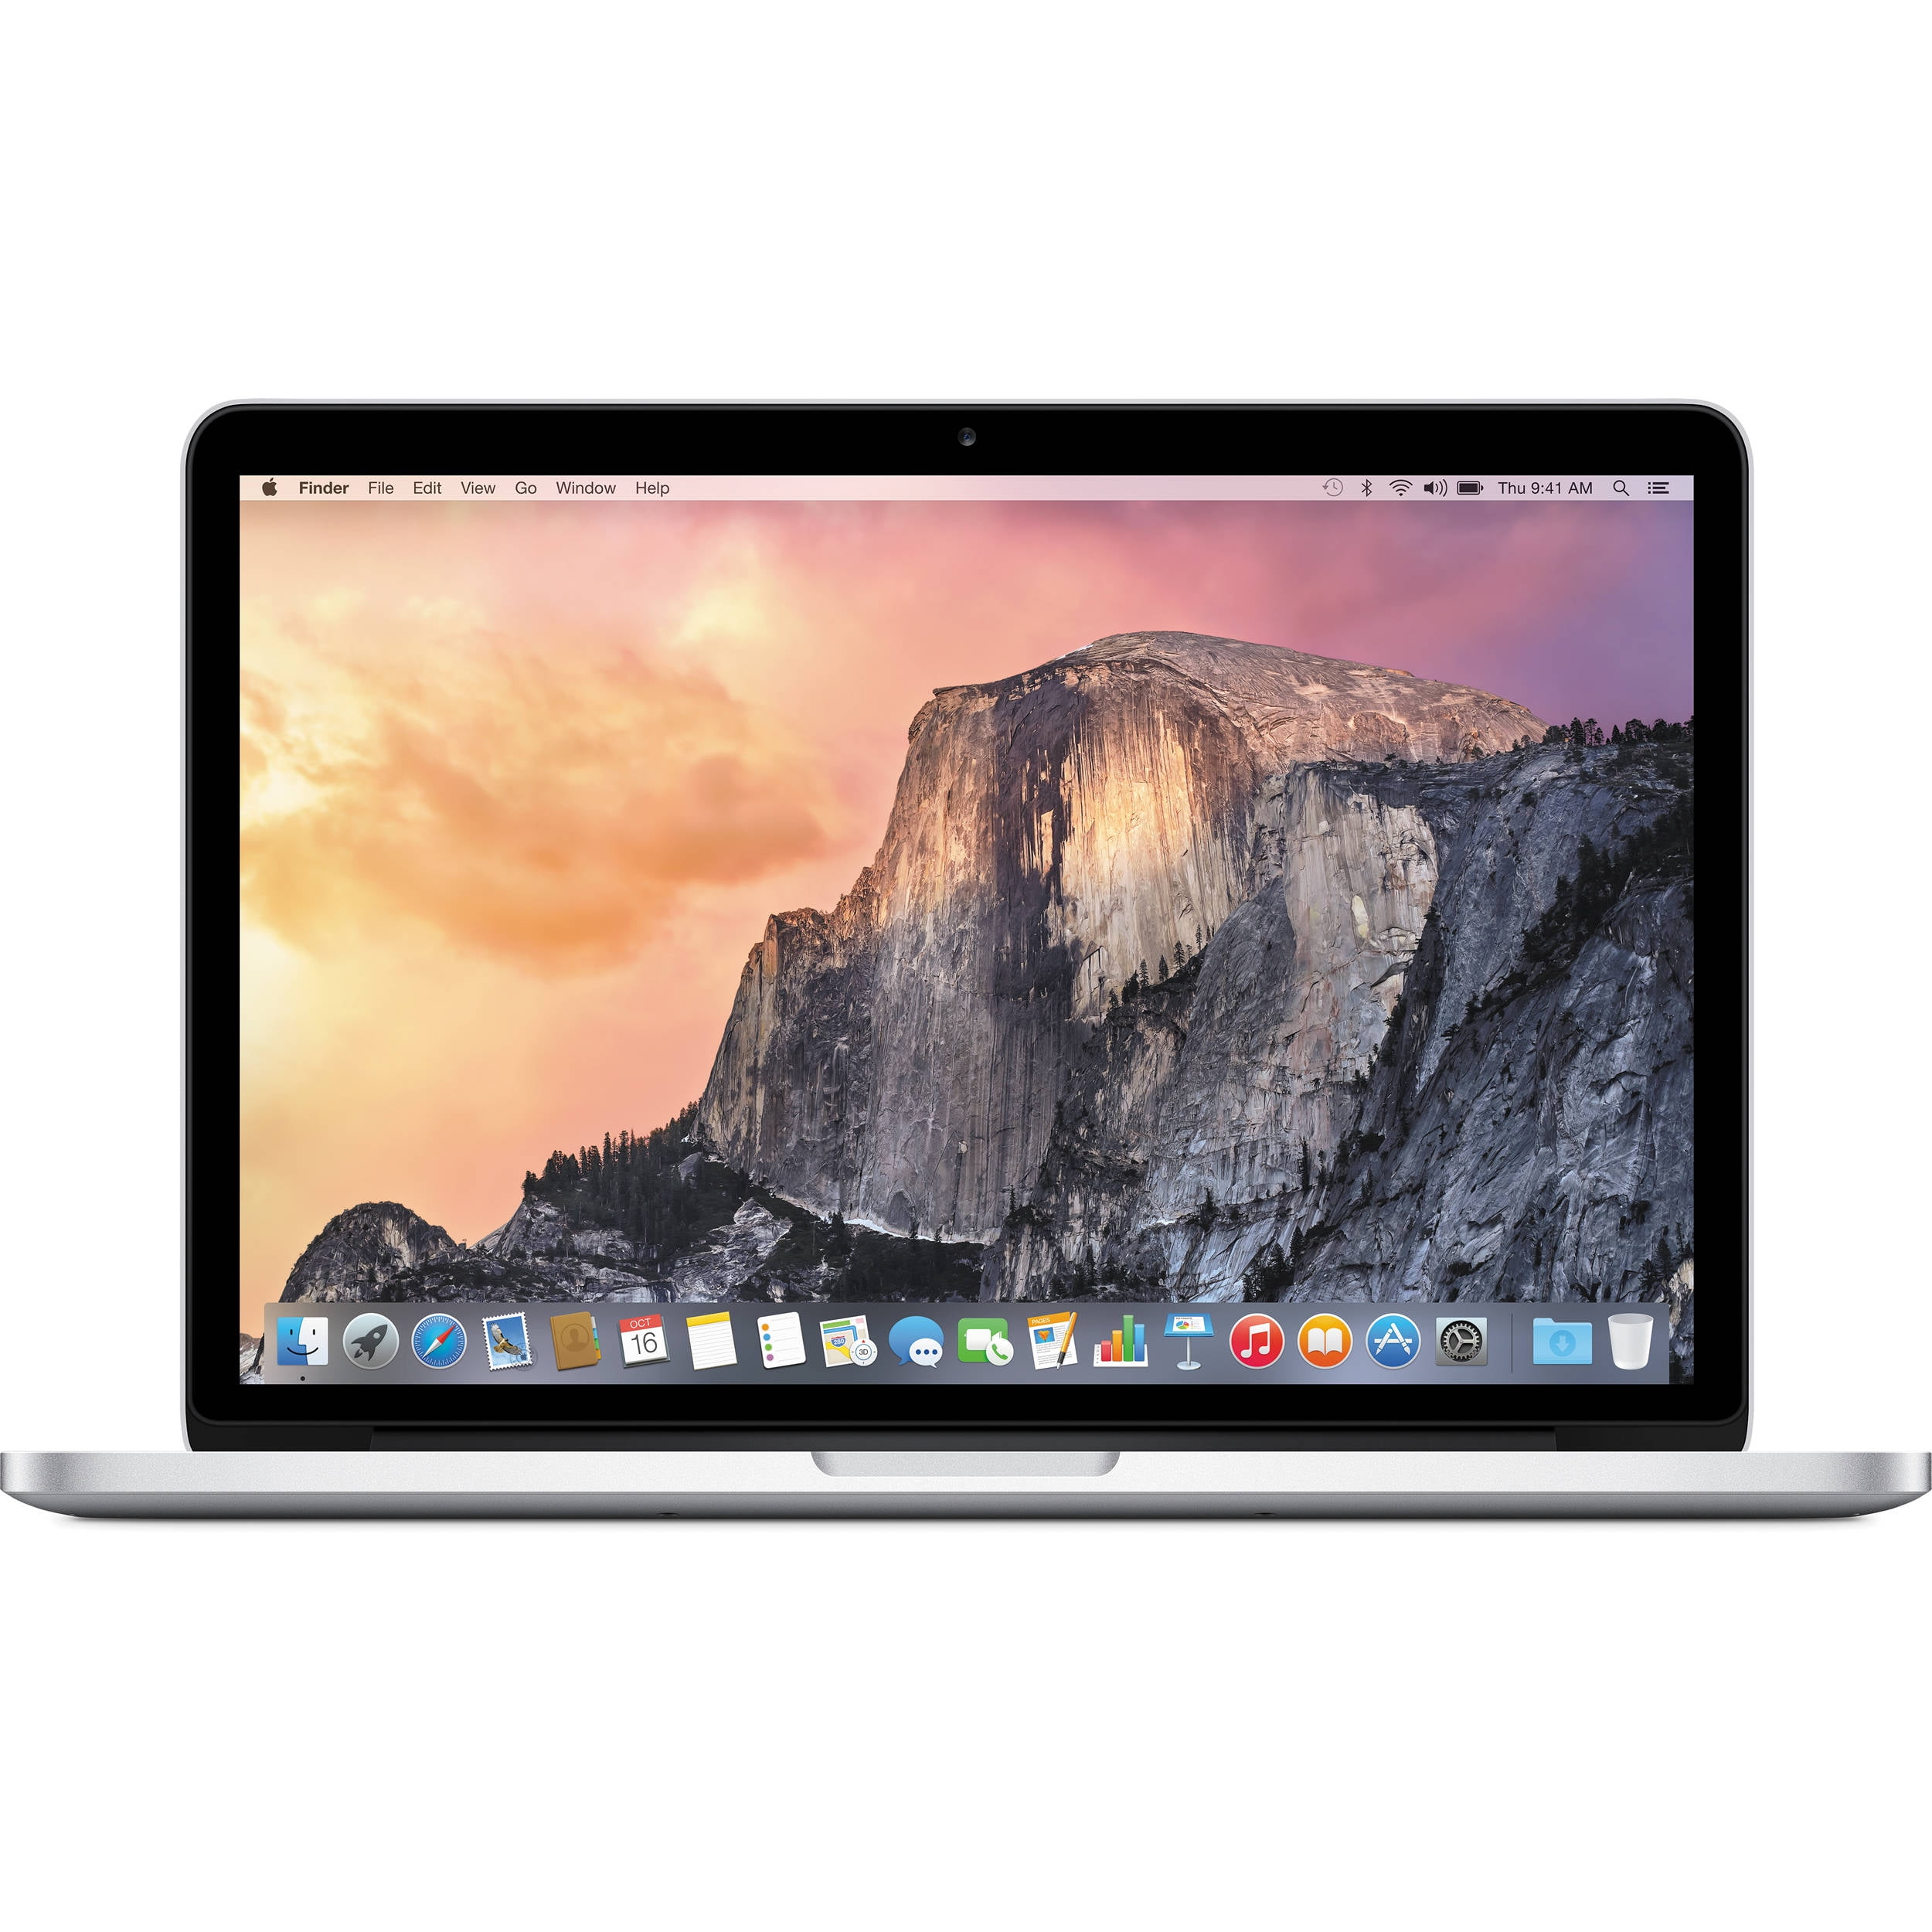 Apple macbook pro core i5 2.7 13 early 2015 imac con display retina group